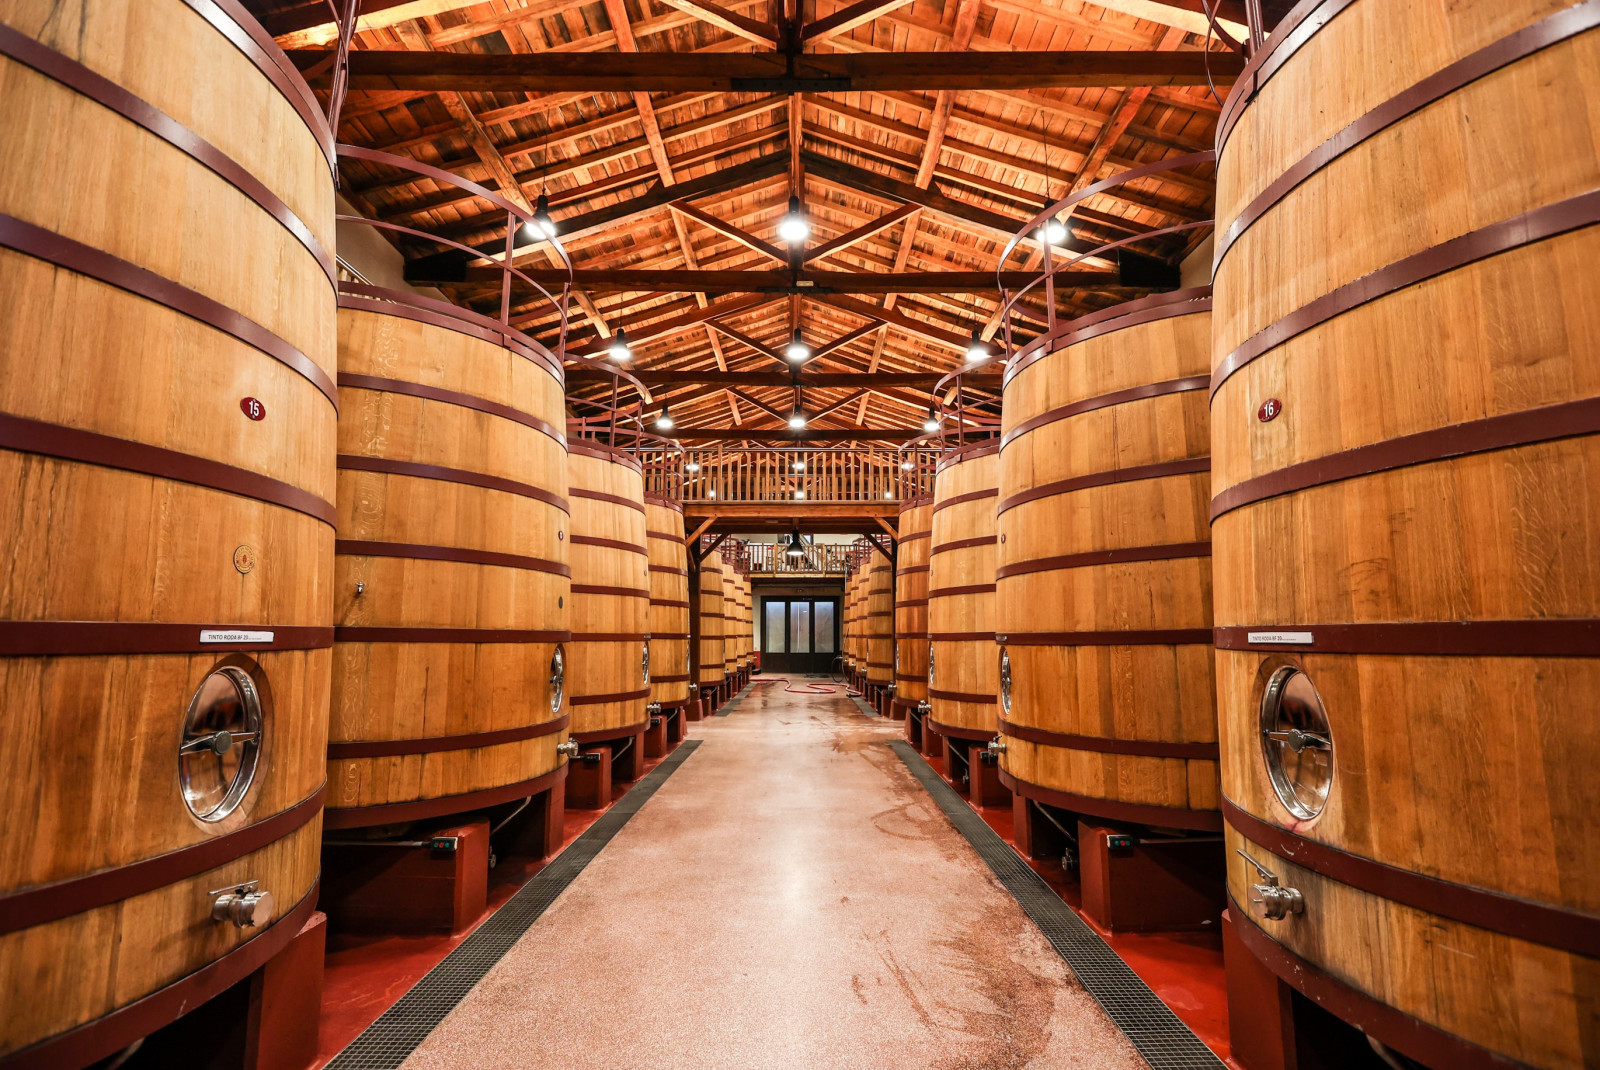 Large wine barrels